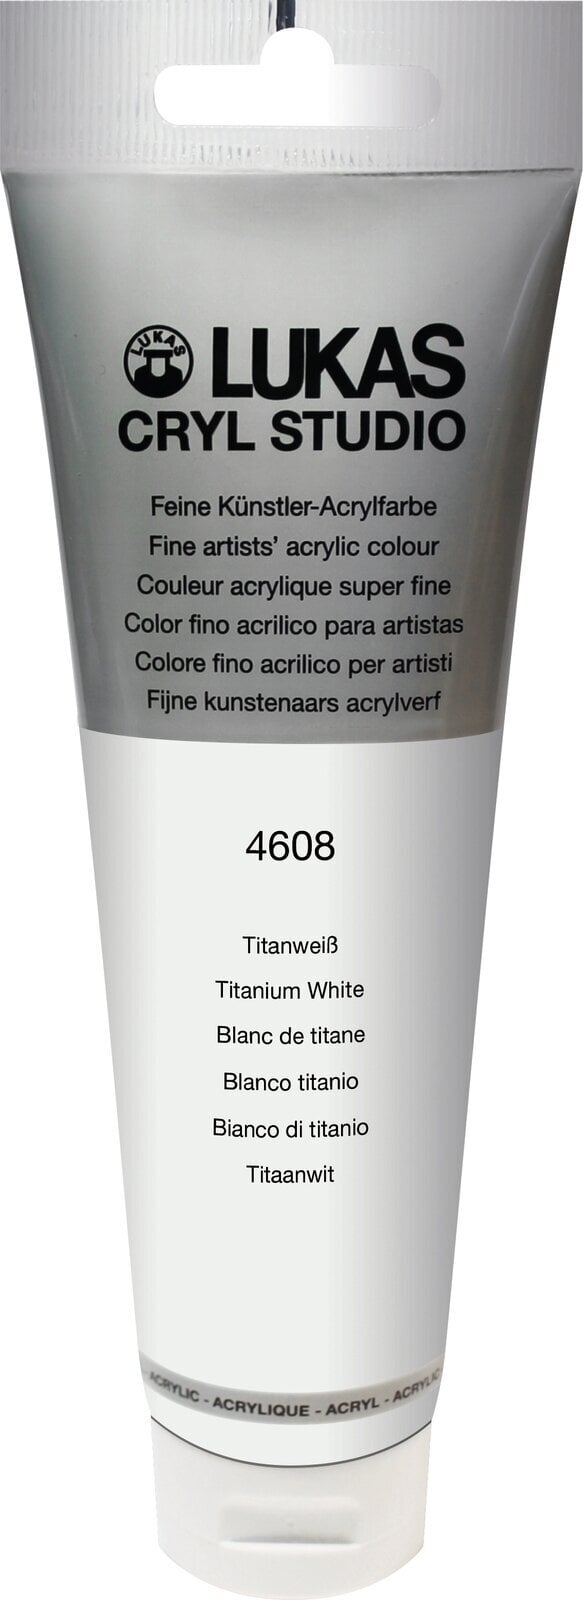 Tinta acrílica Lukas Cryl Studio Tinta acrílica 125 ml Titanium White